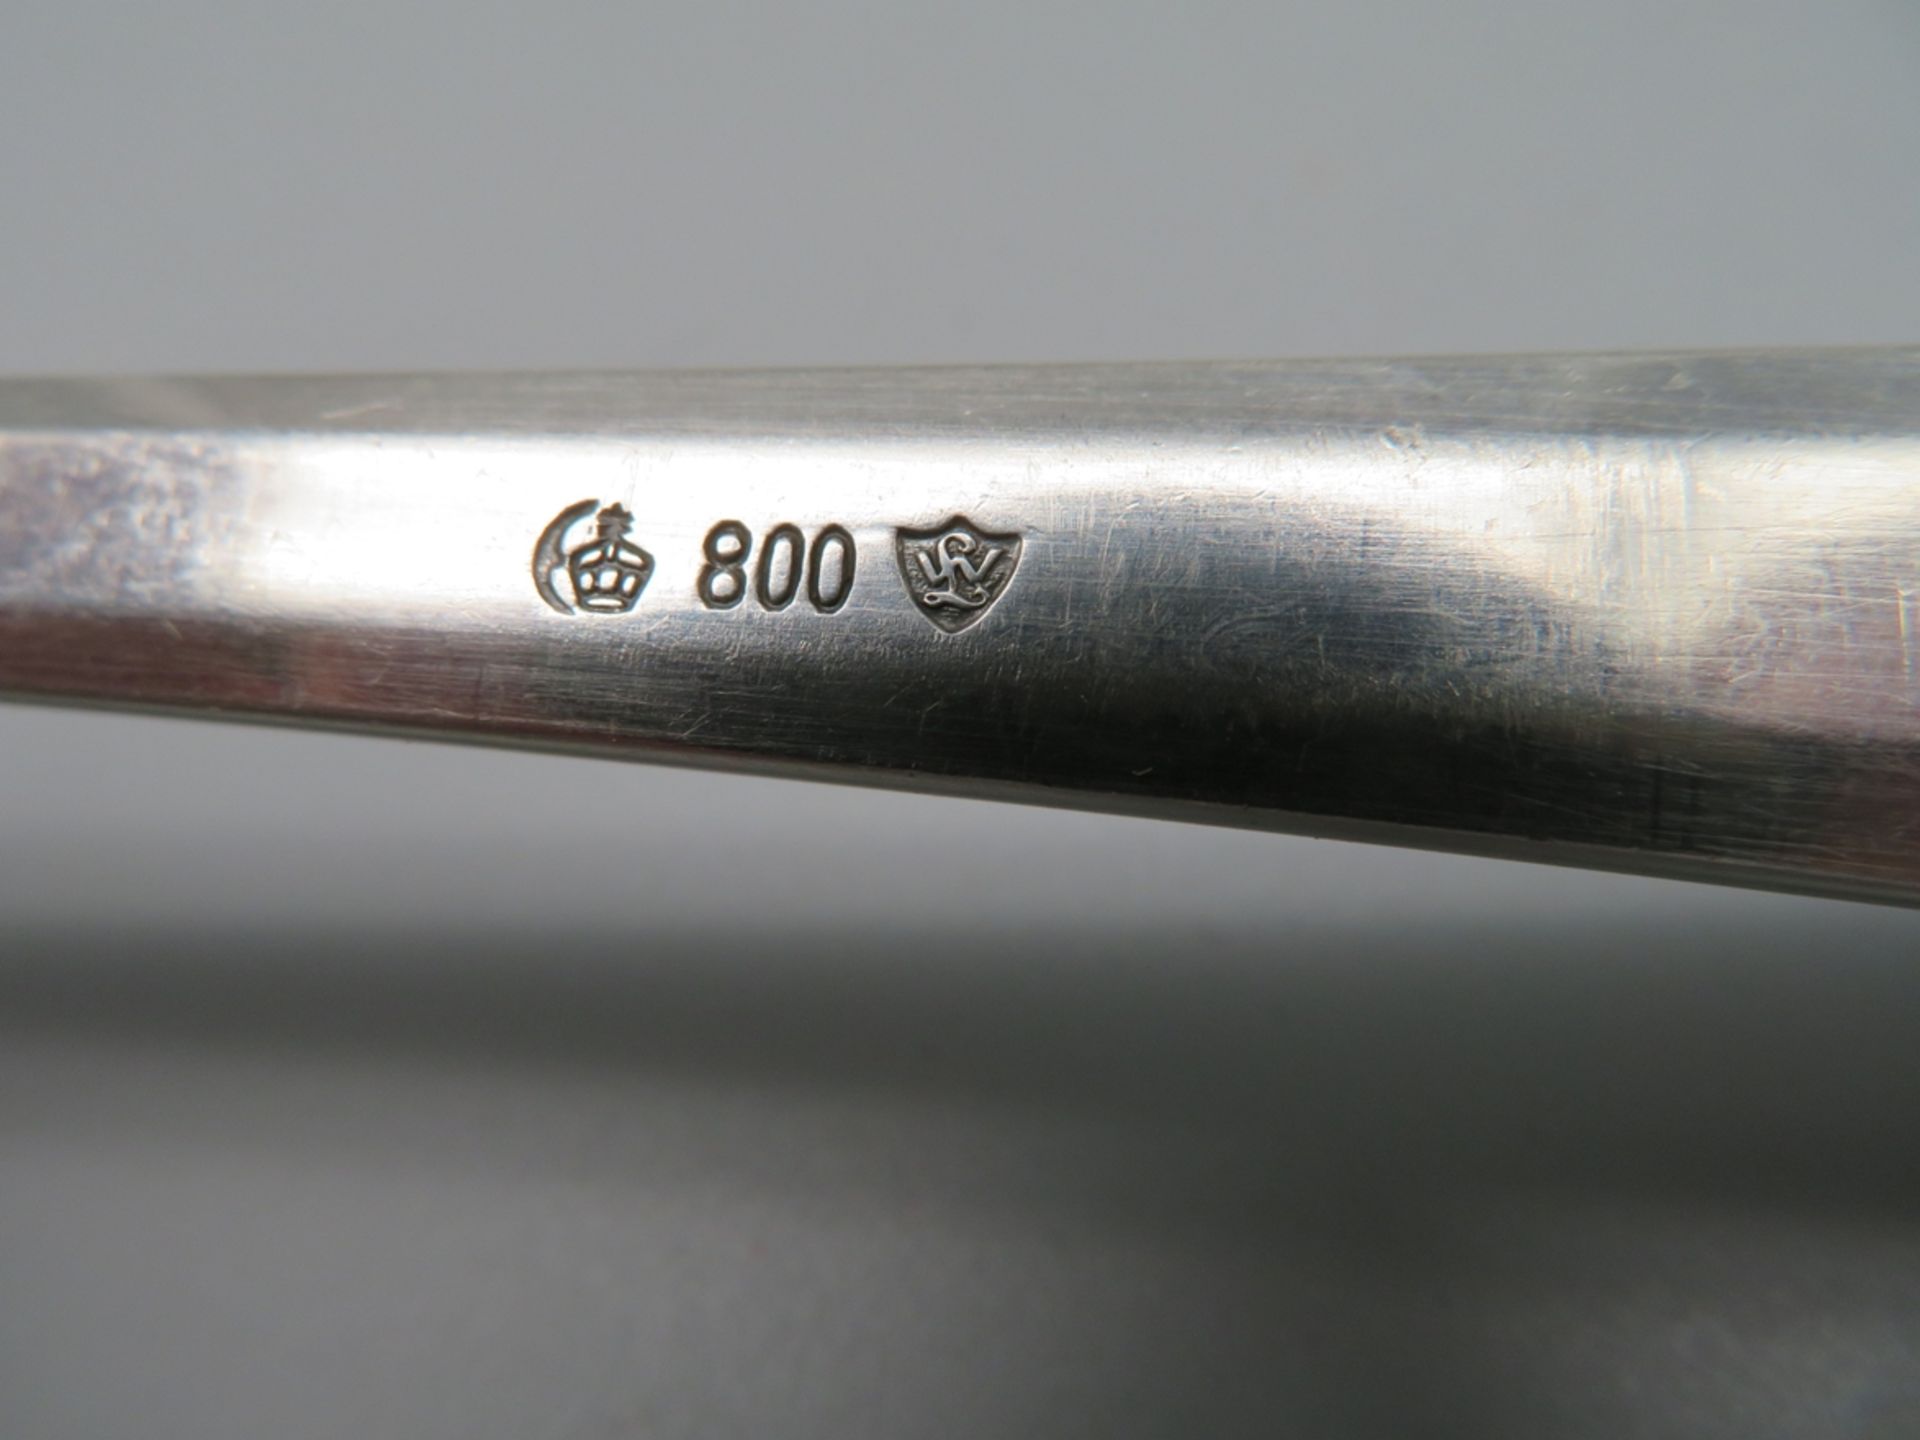 Kelle, WL, 1. Hälfte 20. Jahrhundert, Silber 800/000, punziert, 226,7 g, Herstellermarke "WL", l 34 - Image 2 of 2